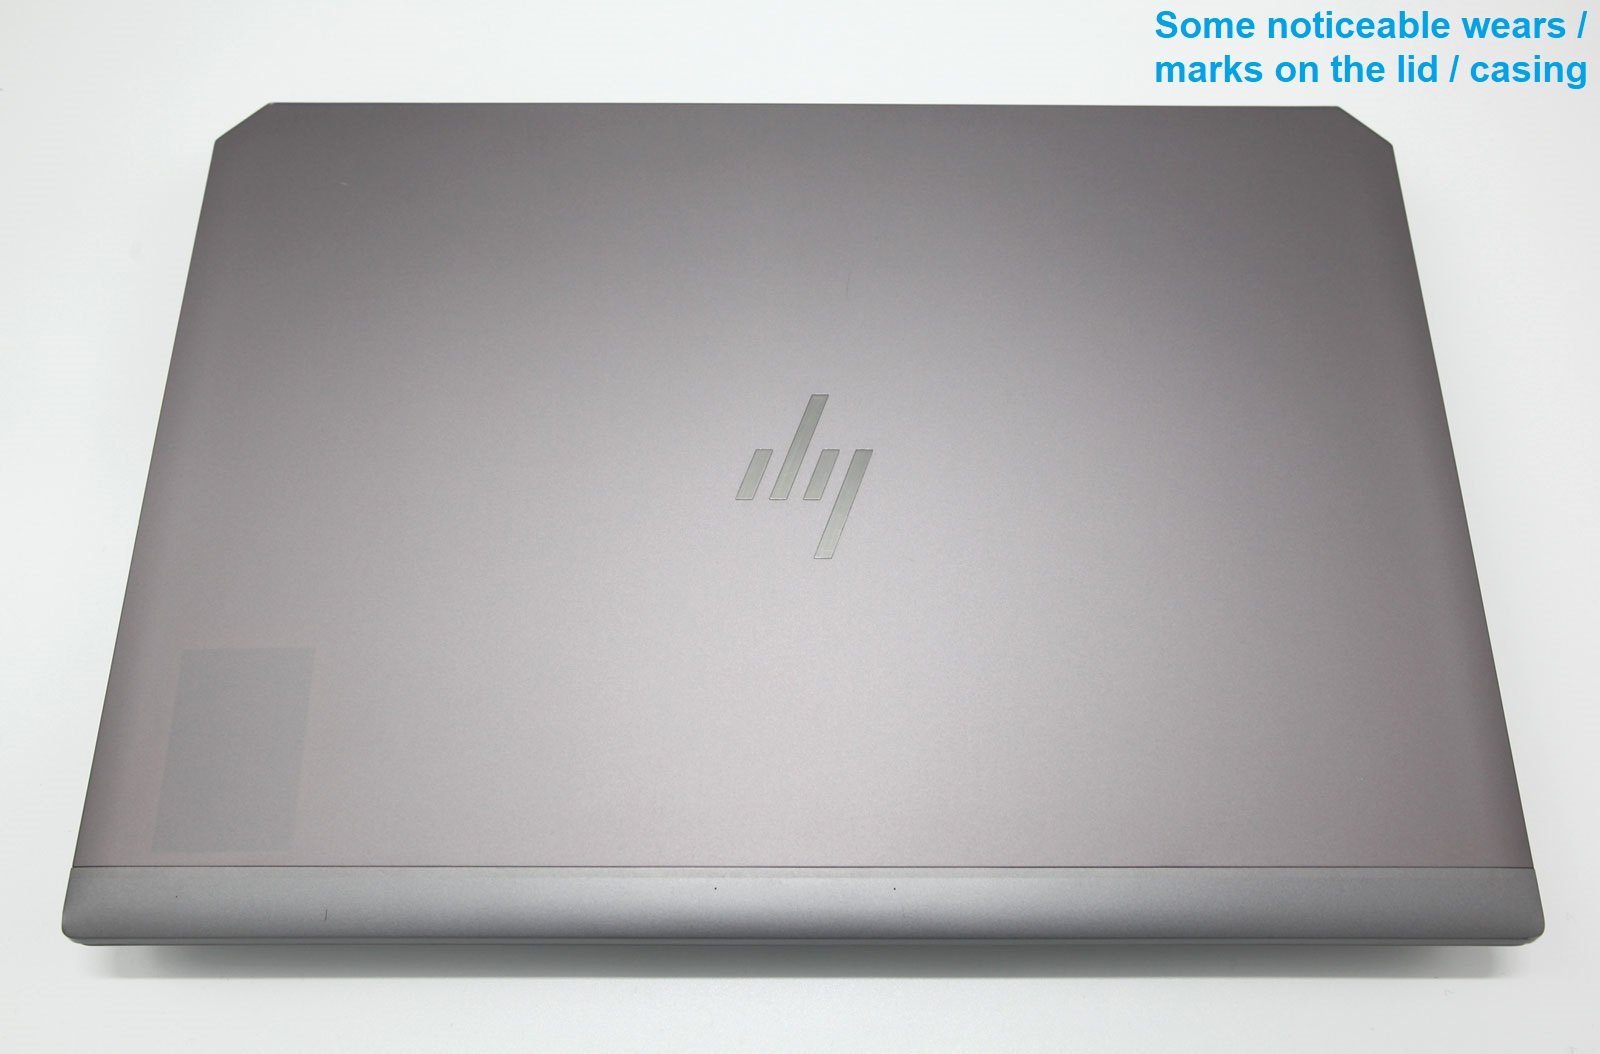 HP ZBook 17 G5 CAD Laptop: Core i7, 32GB RAM, 1TB SSD+ HDD, P4200, Warranty - CruiseTech